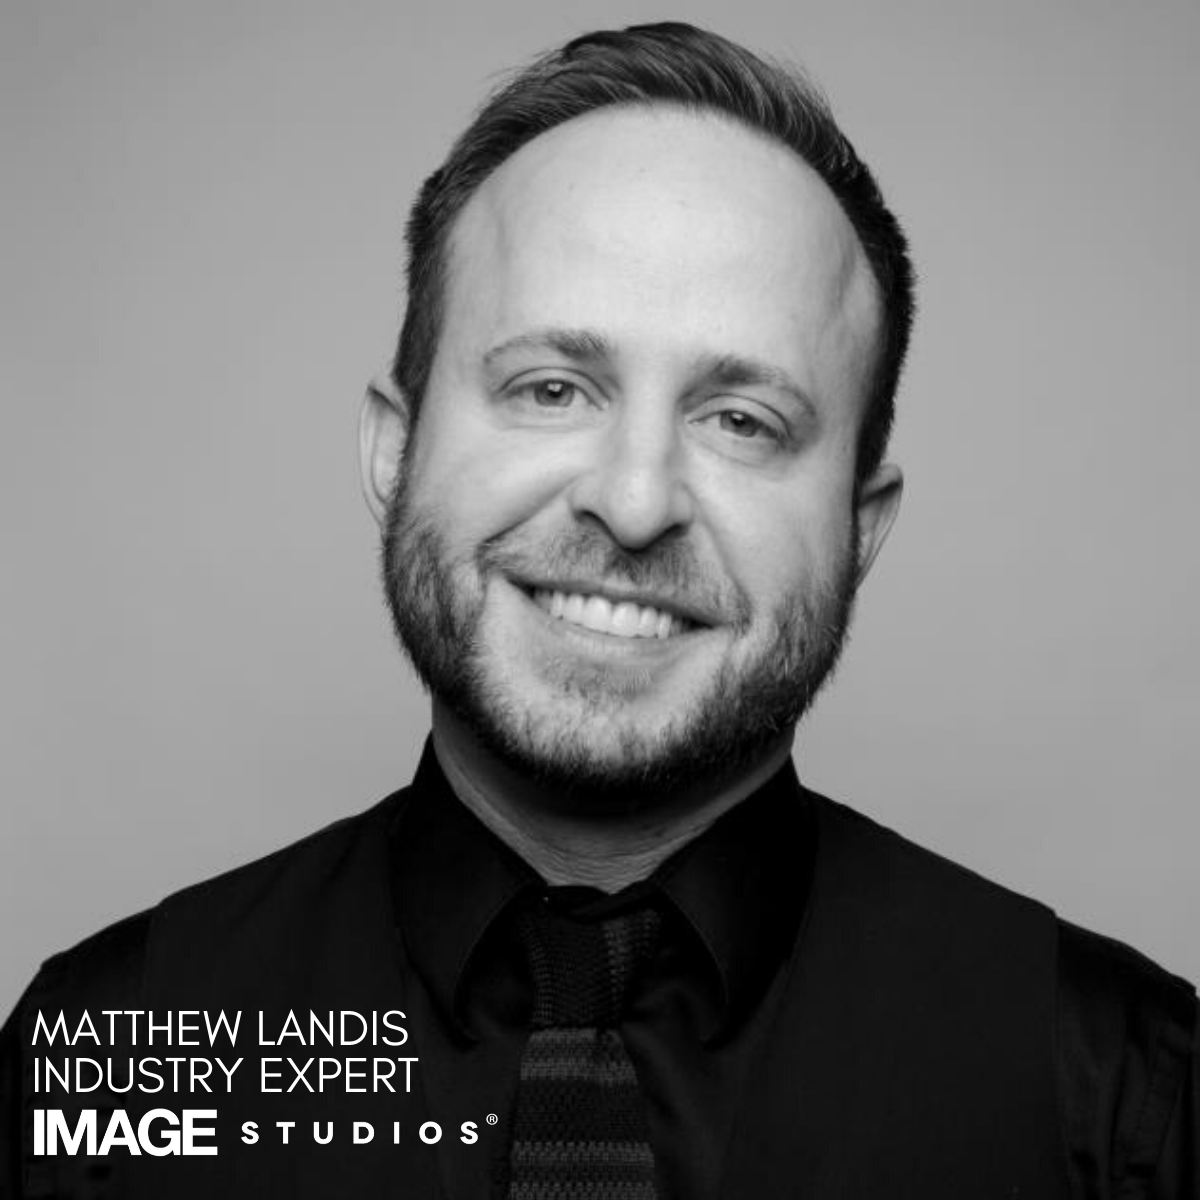 Introducing Matthew Landis, Industry Expert at IMAGE Studios®!